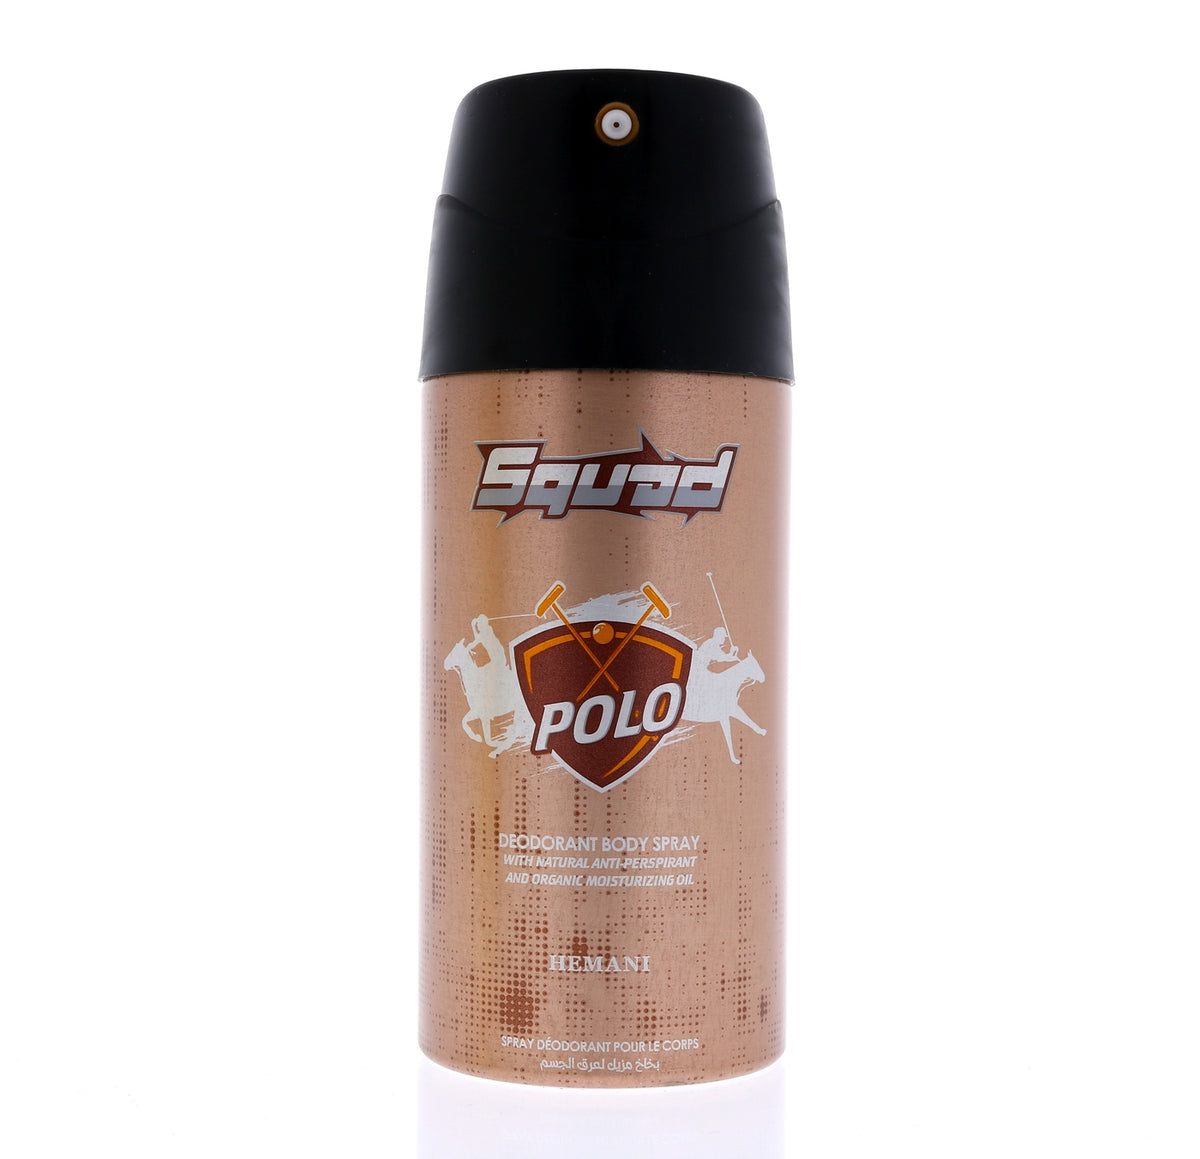 hemani-squad-deodorant-spray-polo-150ml-1